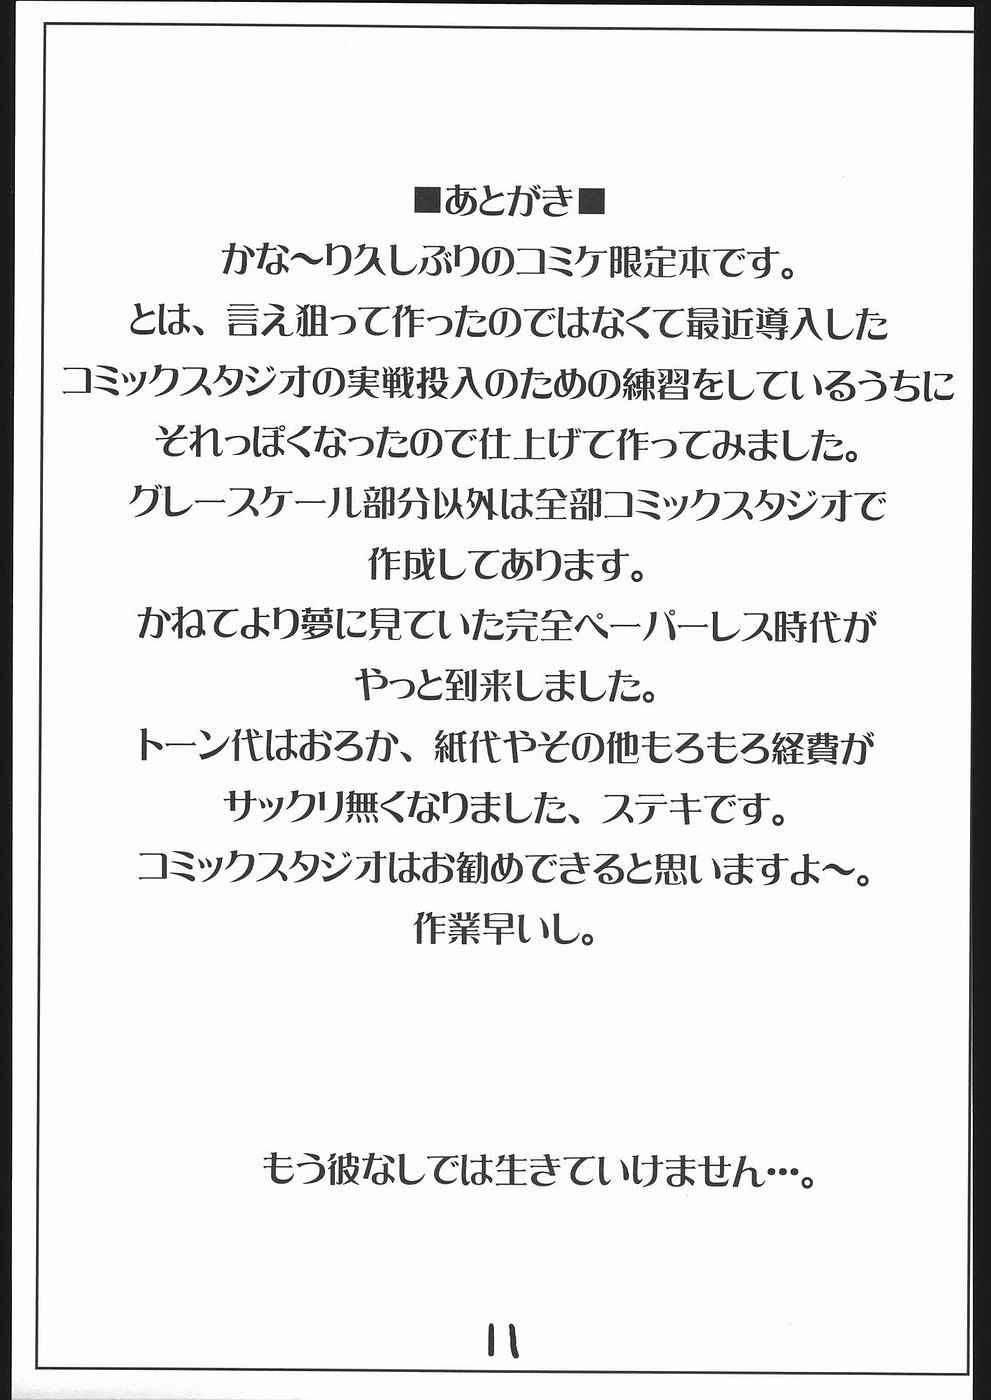 Footfetish Ninpou Ranchiki Sawagi! - 2x2 shinobuden All Natural - Page 12